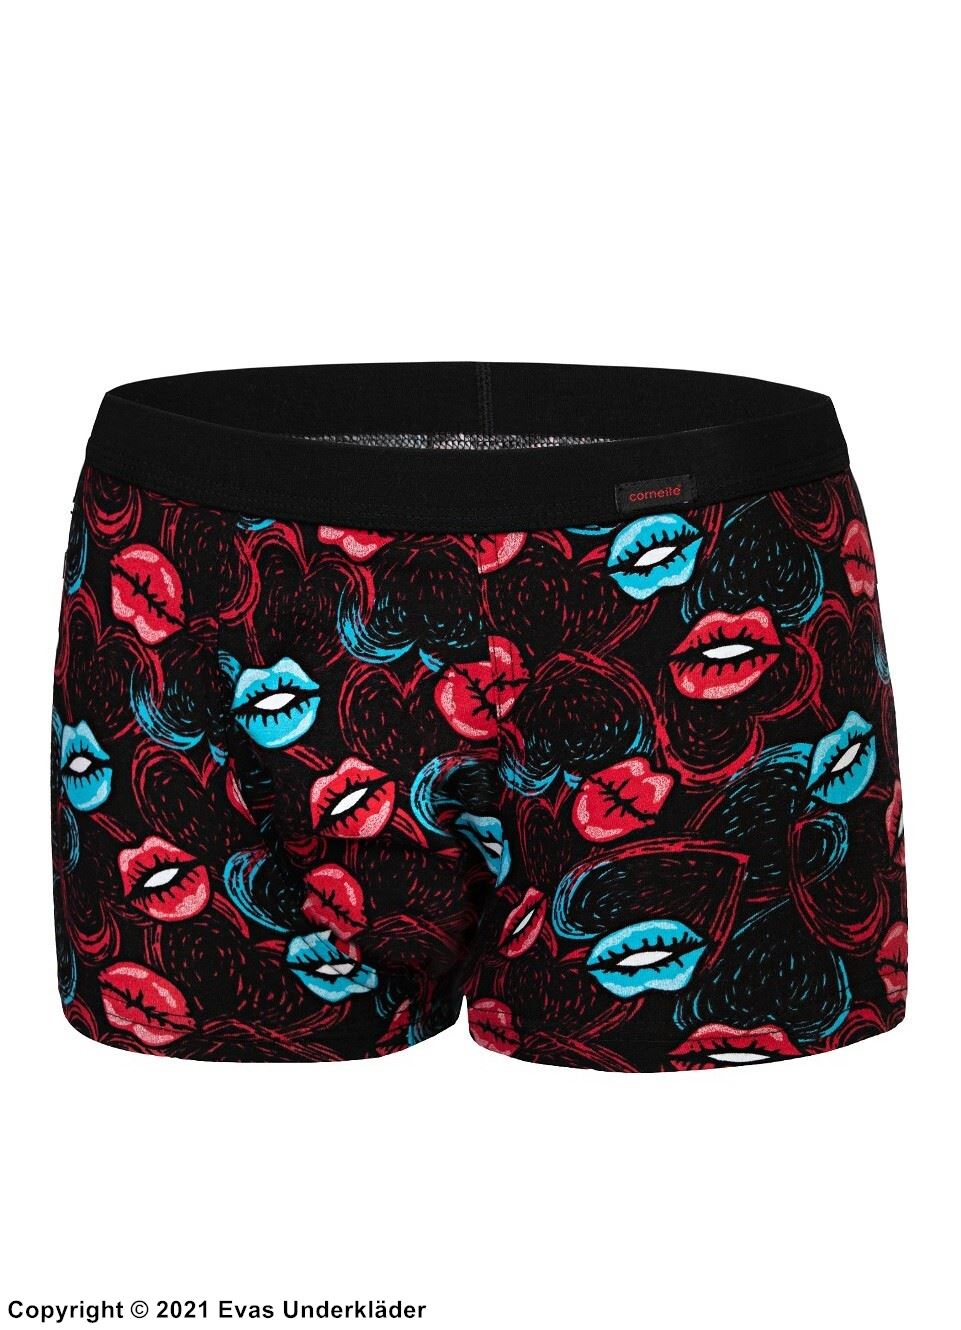 Men's boxer shorts, high quality cotton, lips (pattern)